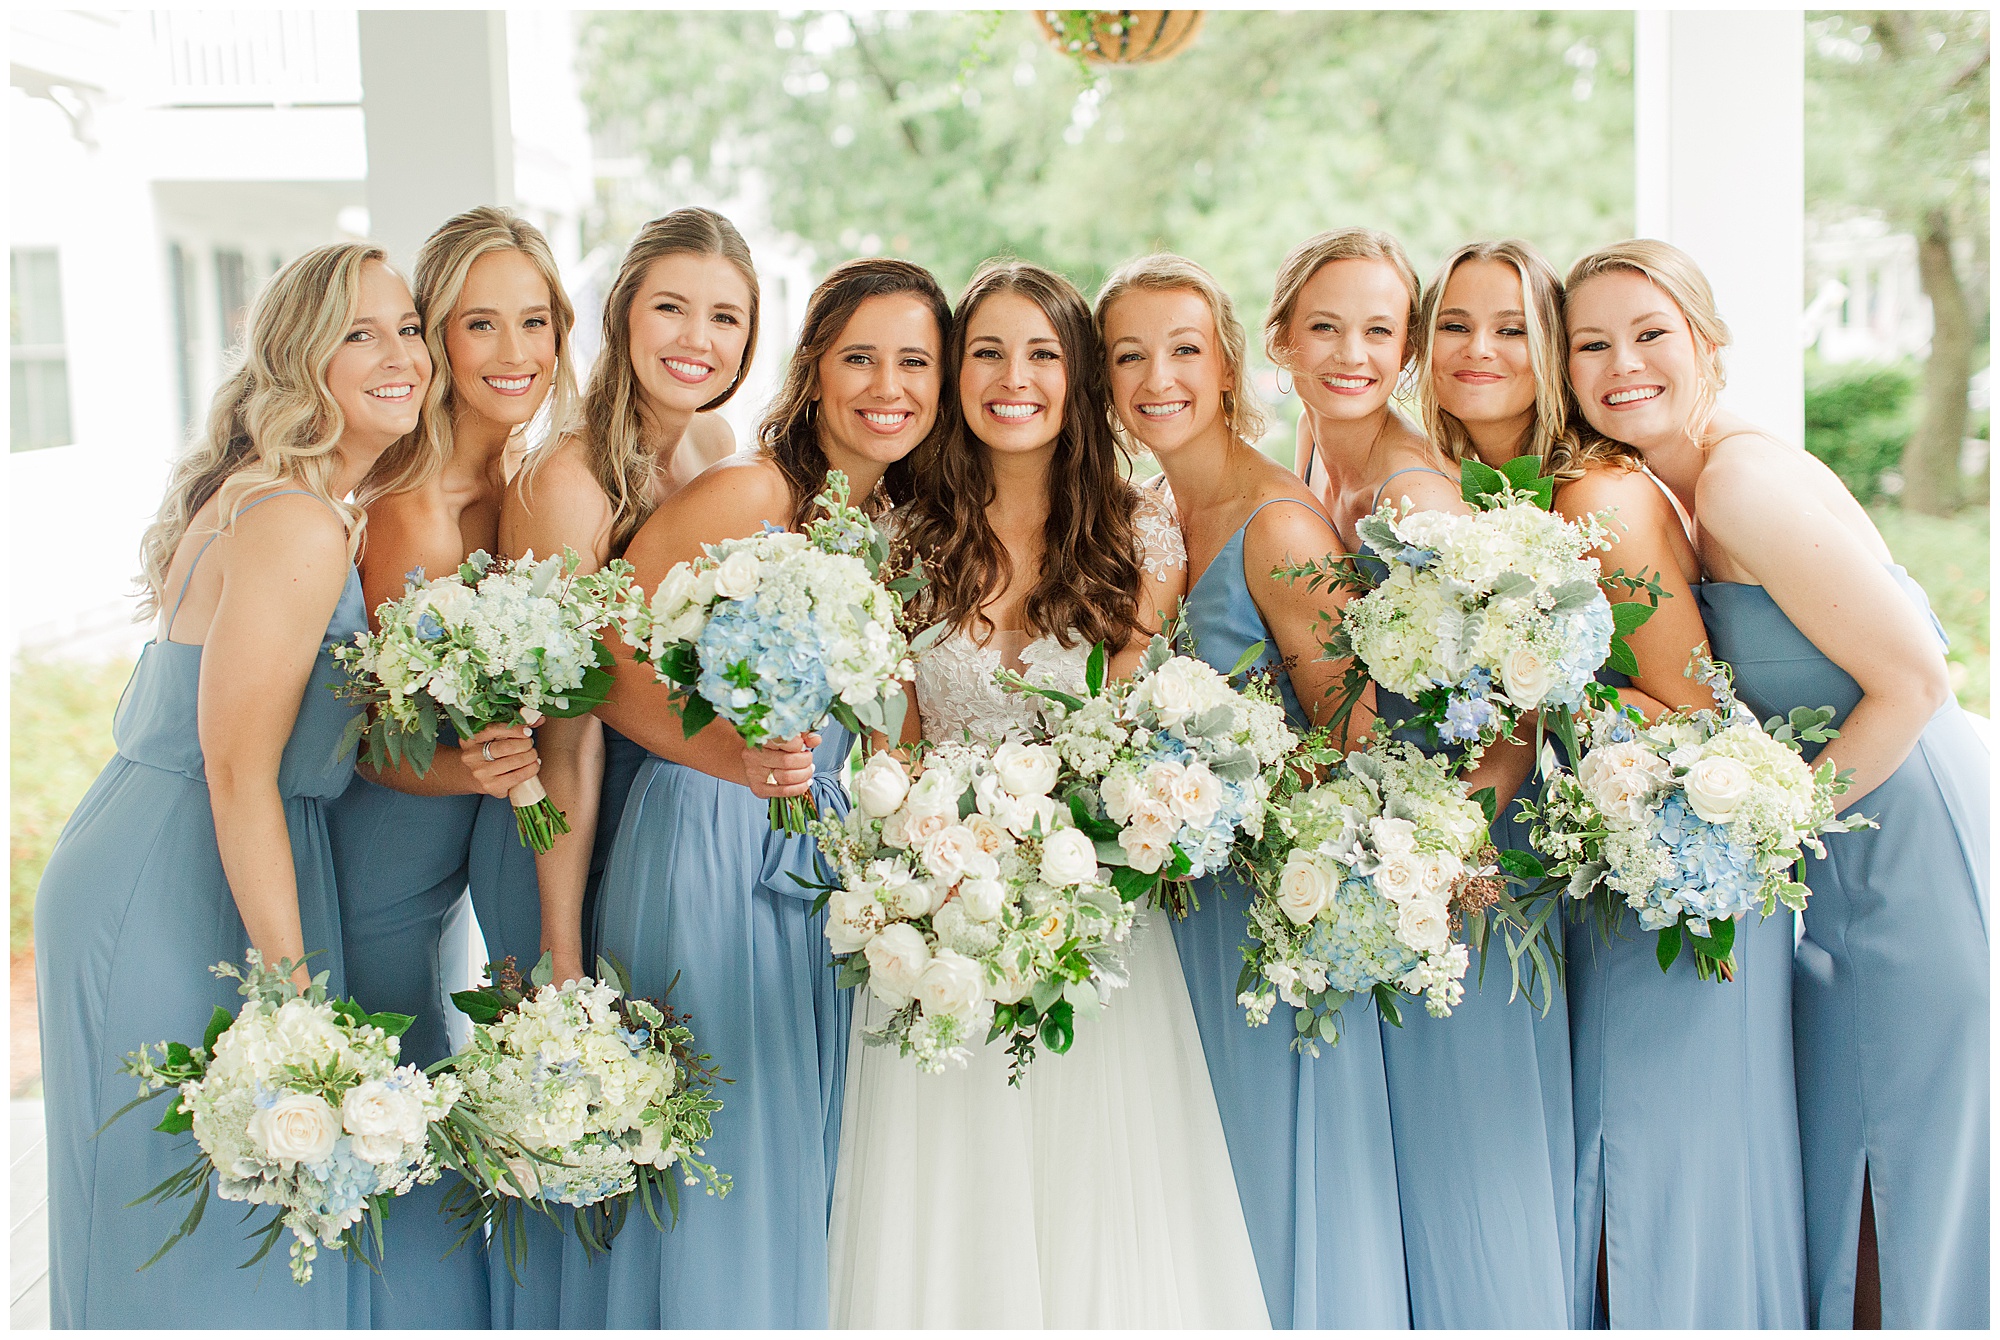 Danielle & Chris, East Beach wedding, Hampton Roads weddings, Kelley Stinson Photography, cornflower blue bridesmaids